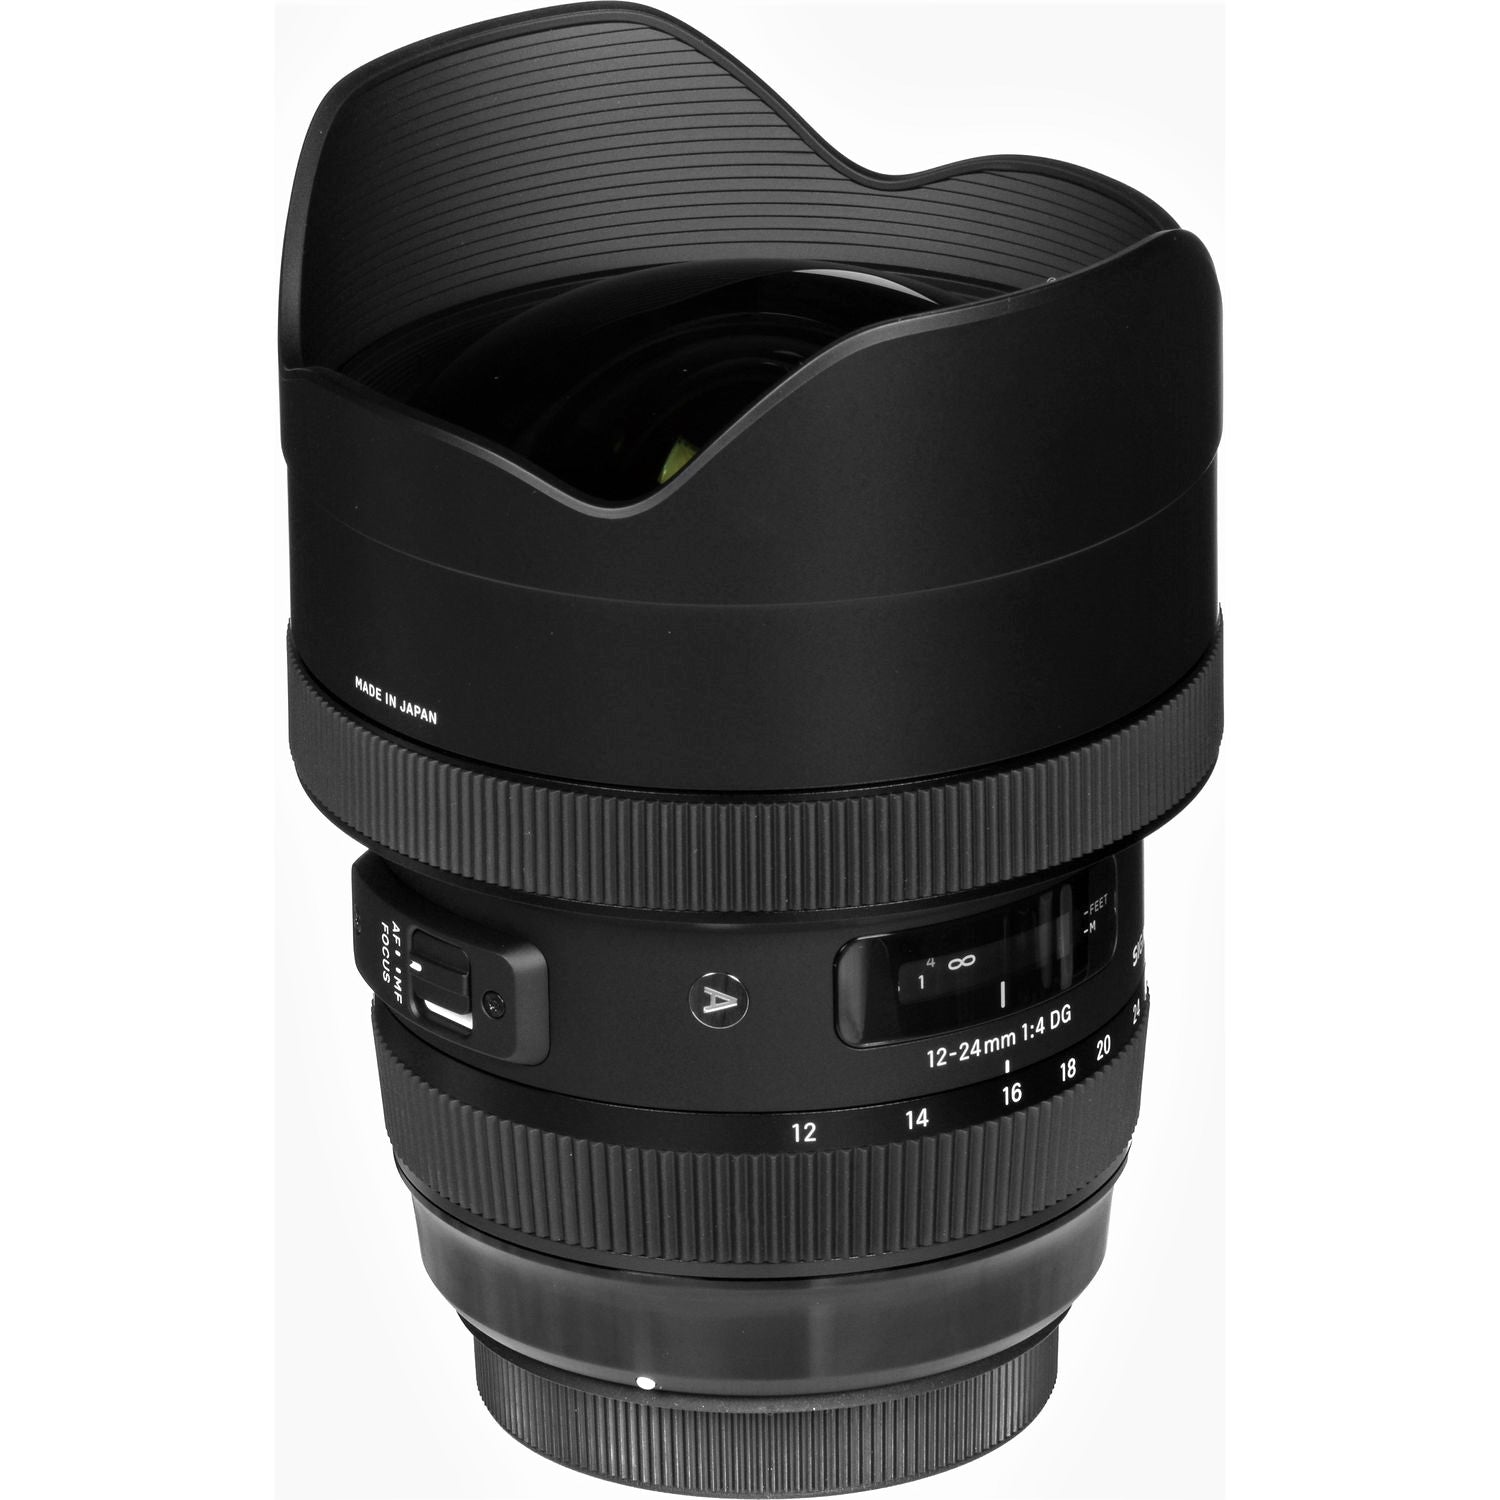 Sigma 12-24mm F4.0 DG HSM Art Lens for Sigma SA